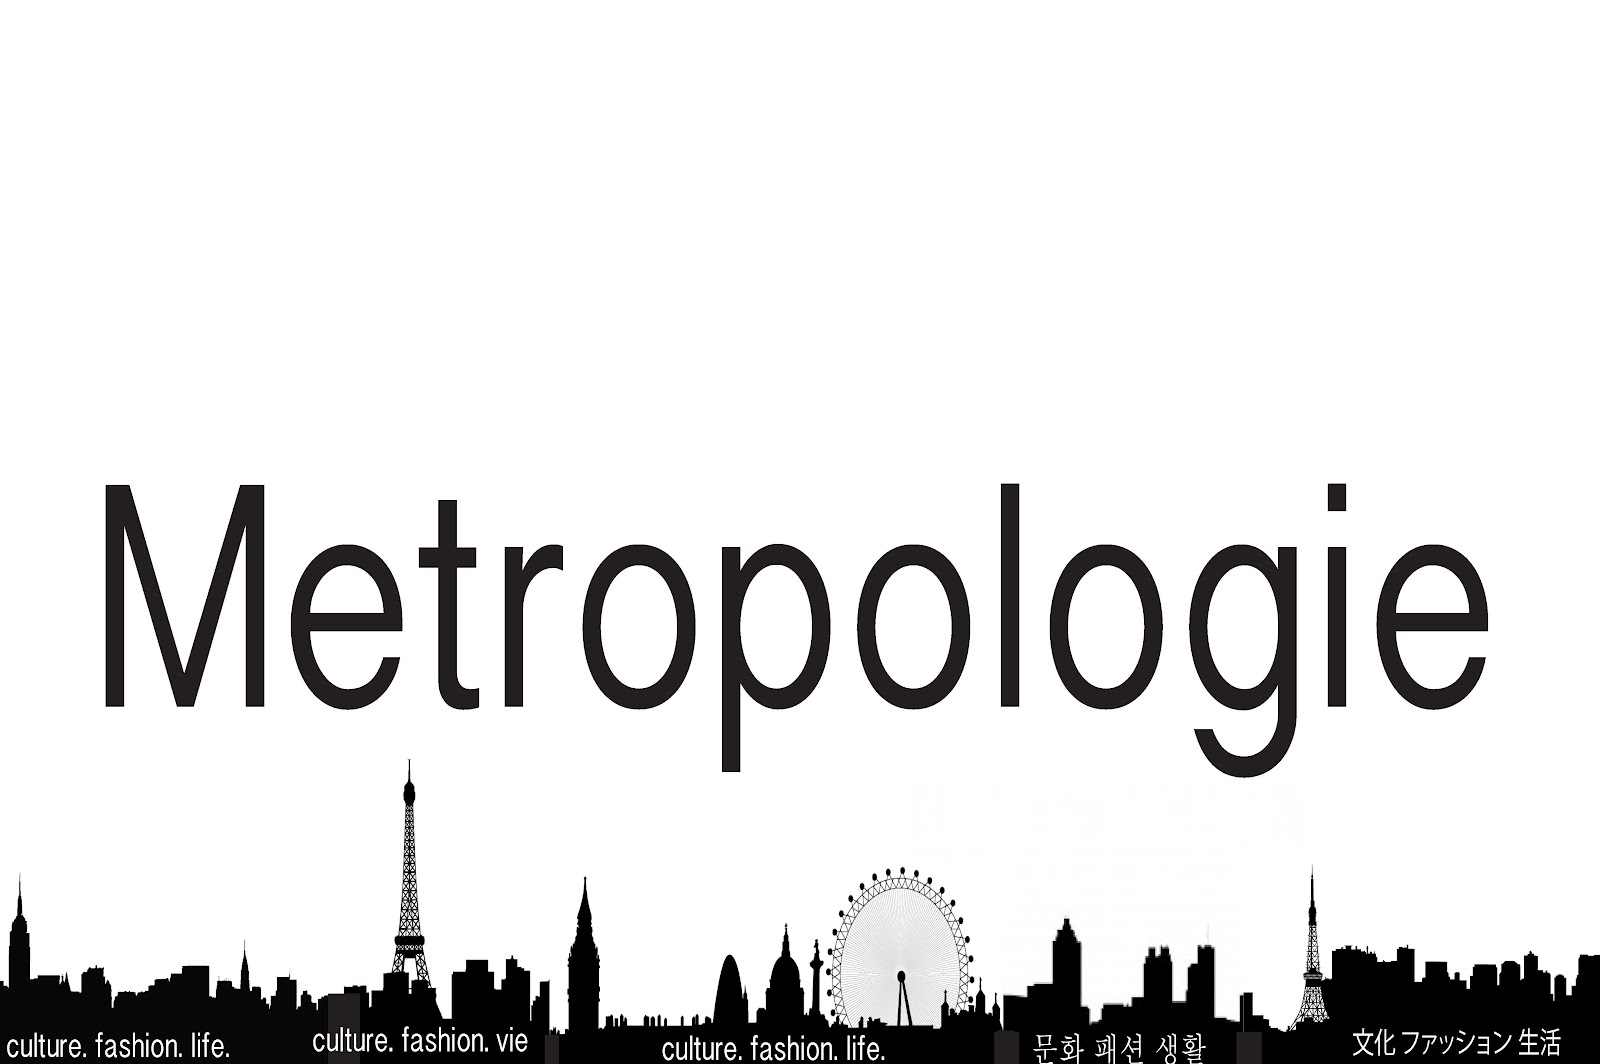 Metropologie